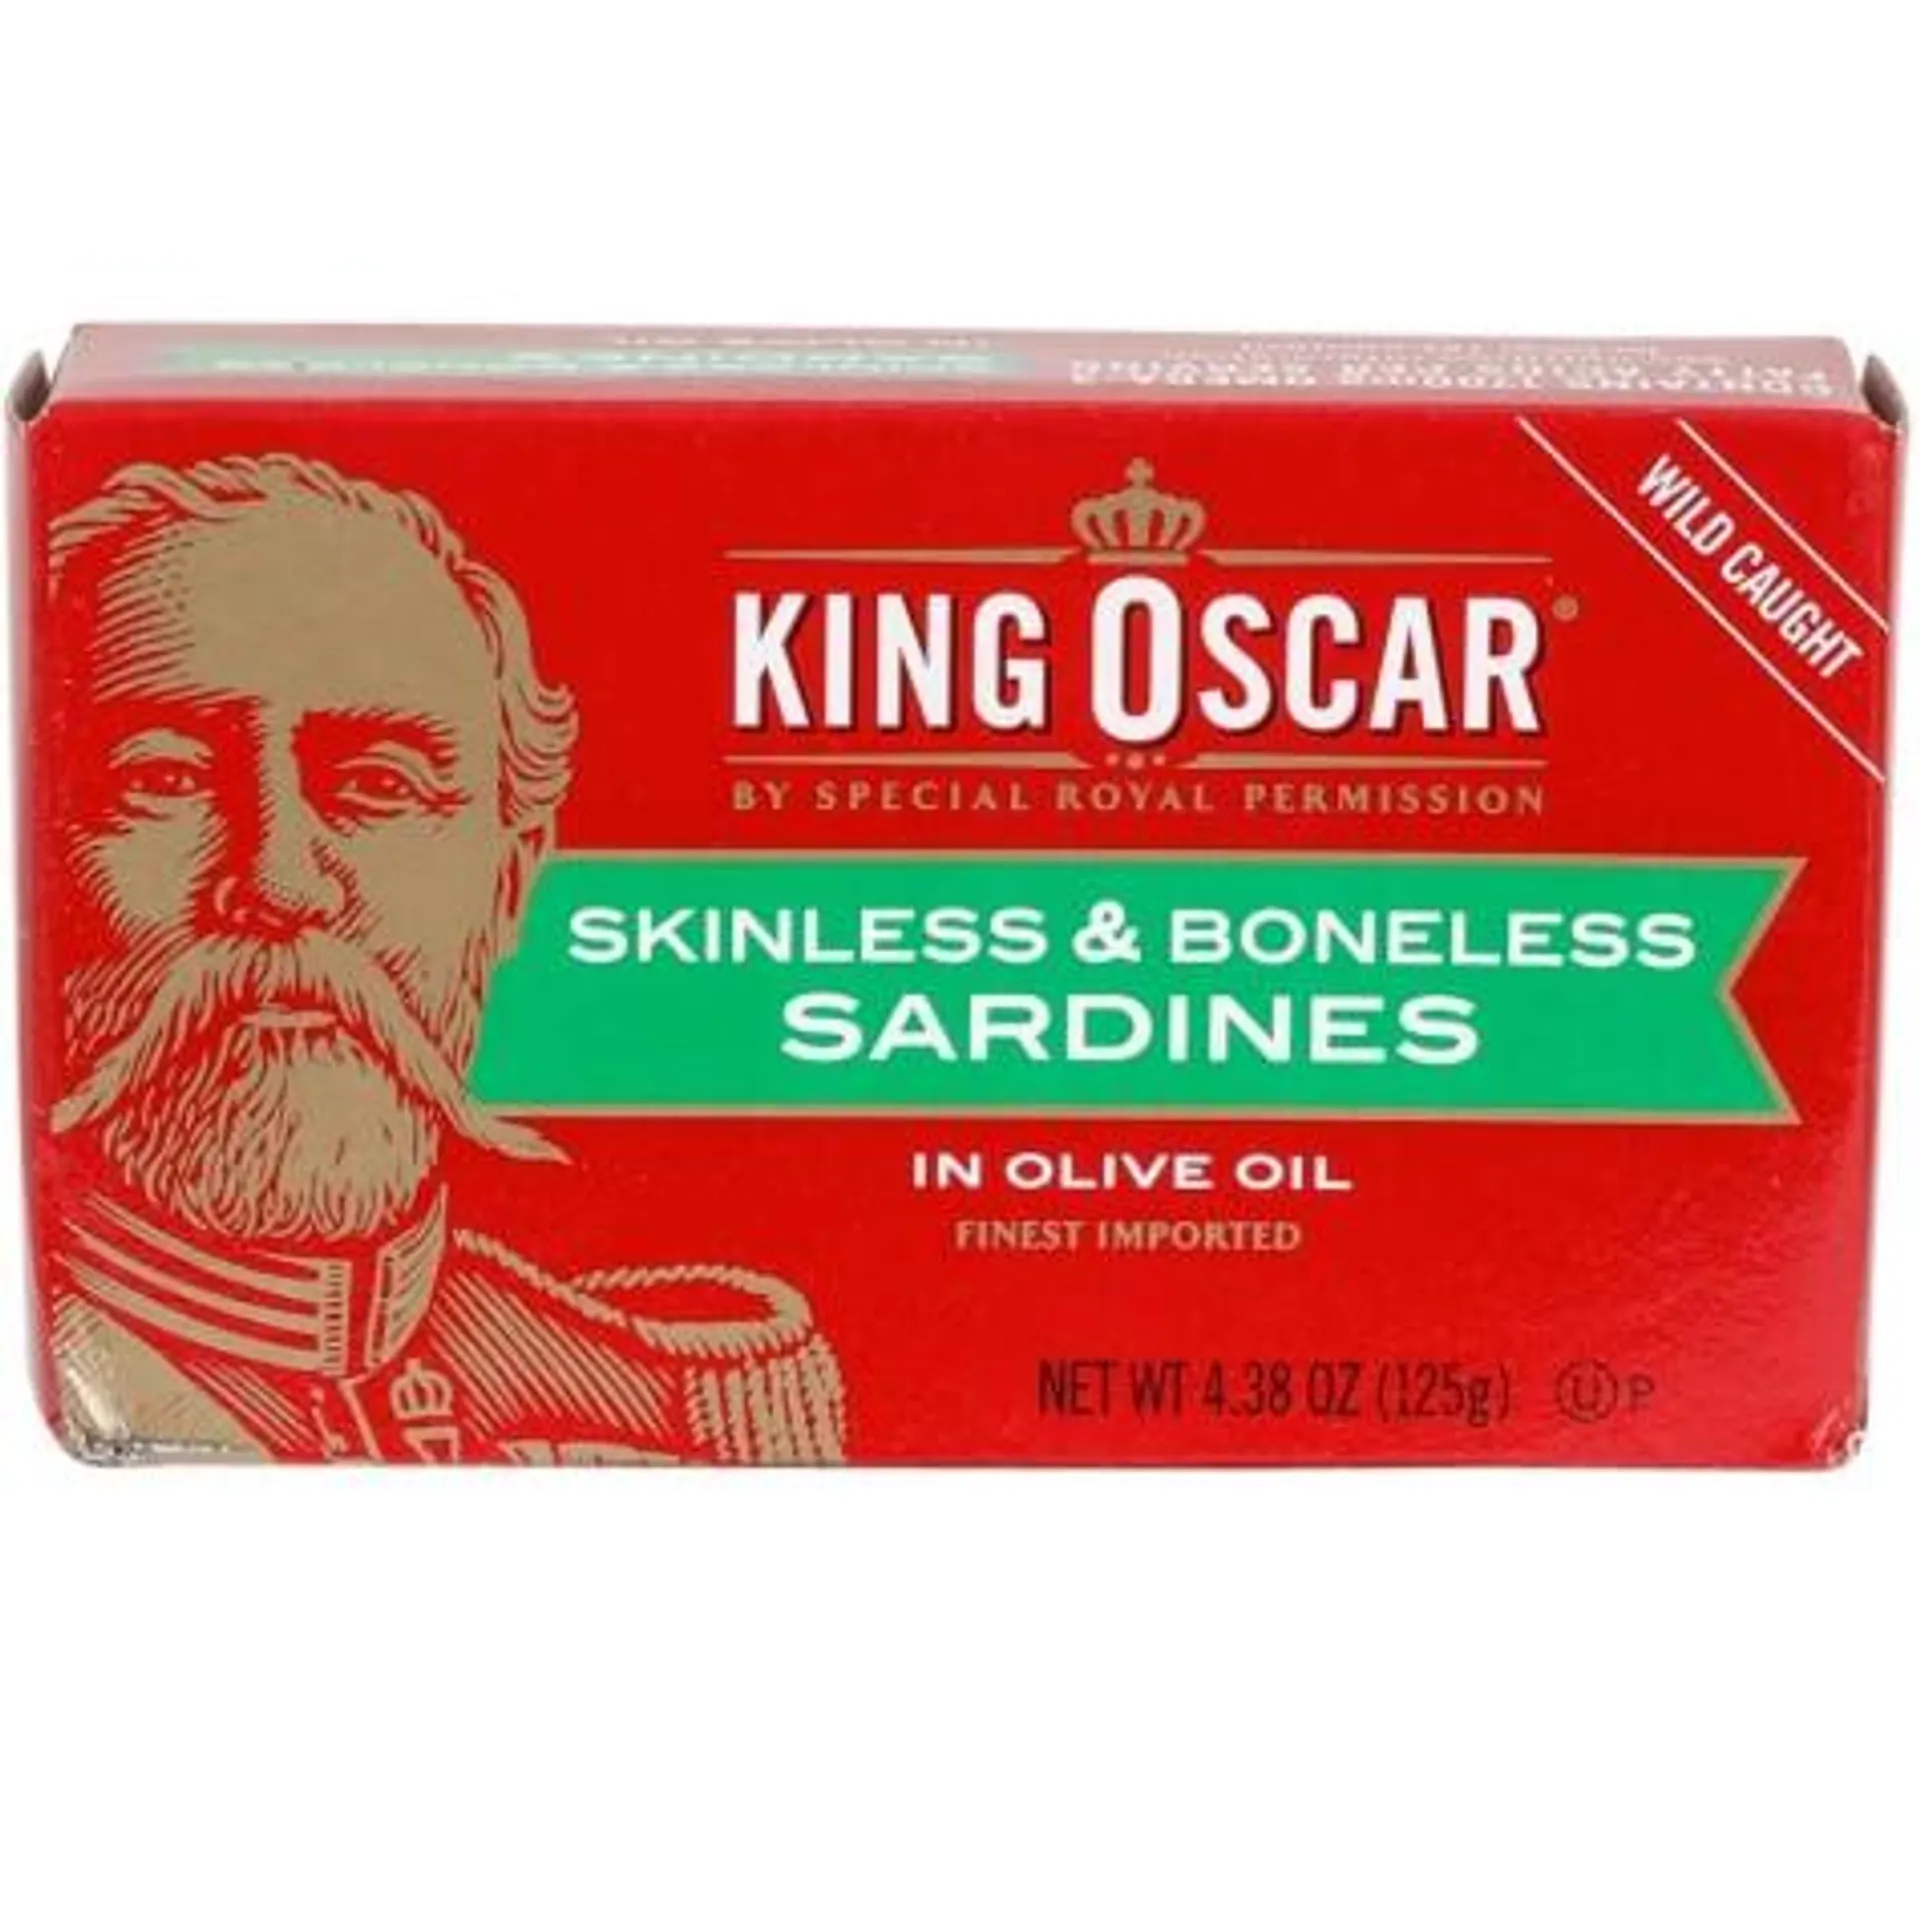 King Oscar Skinless and Boneless Sardines in Olive Oil, 4.38 oz